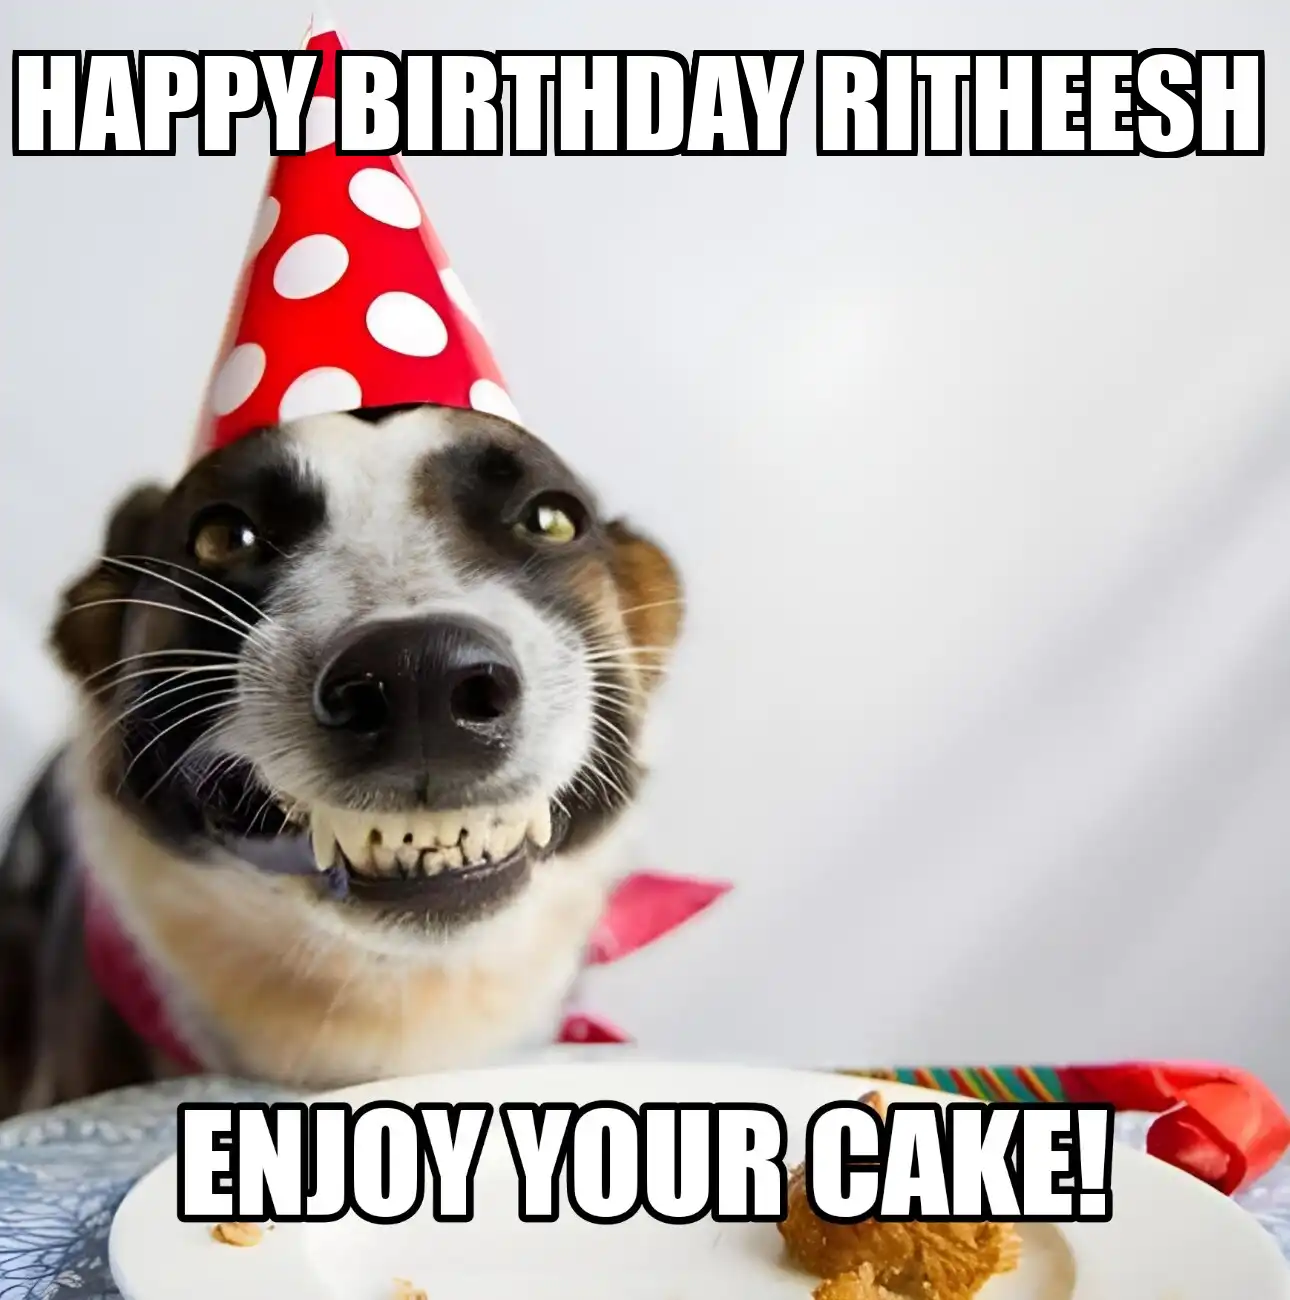 Happy Birthday Ritheesh Enjoy Your Cake Dog Meme